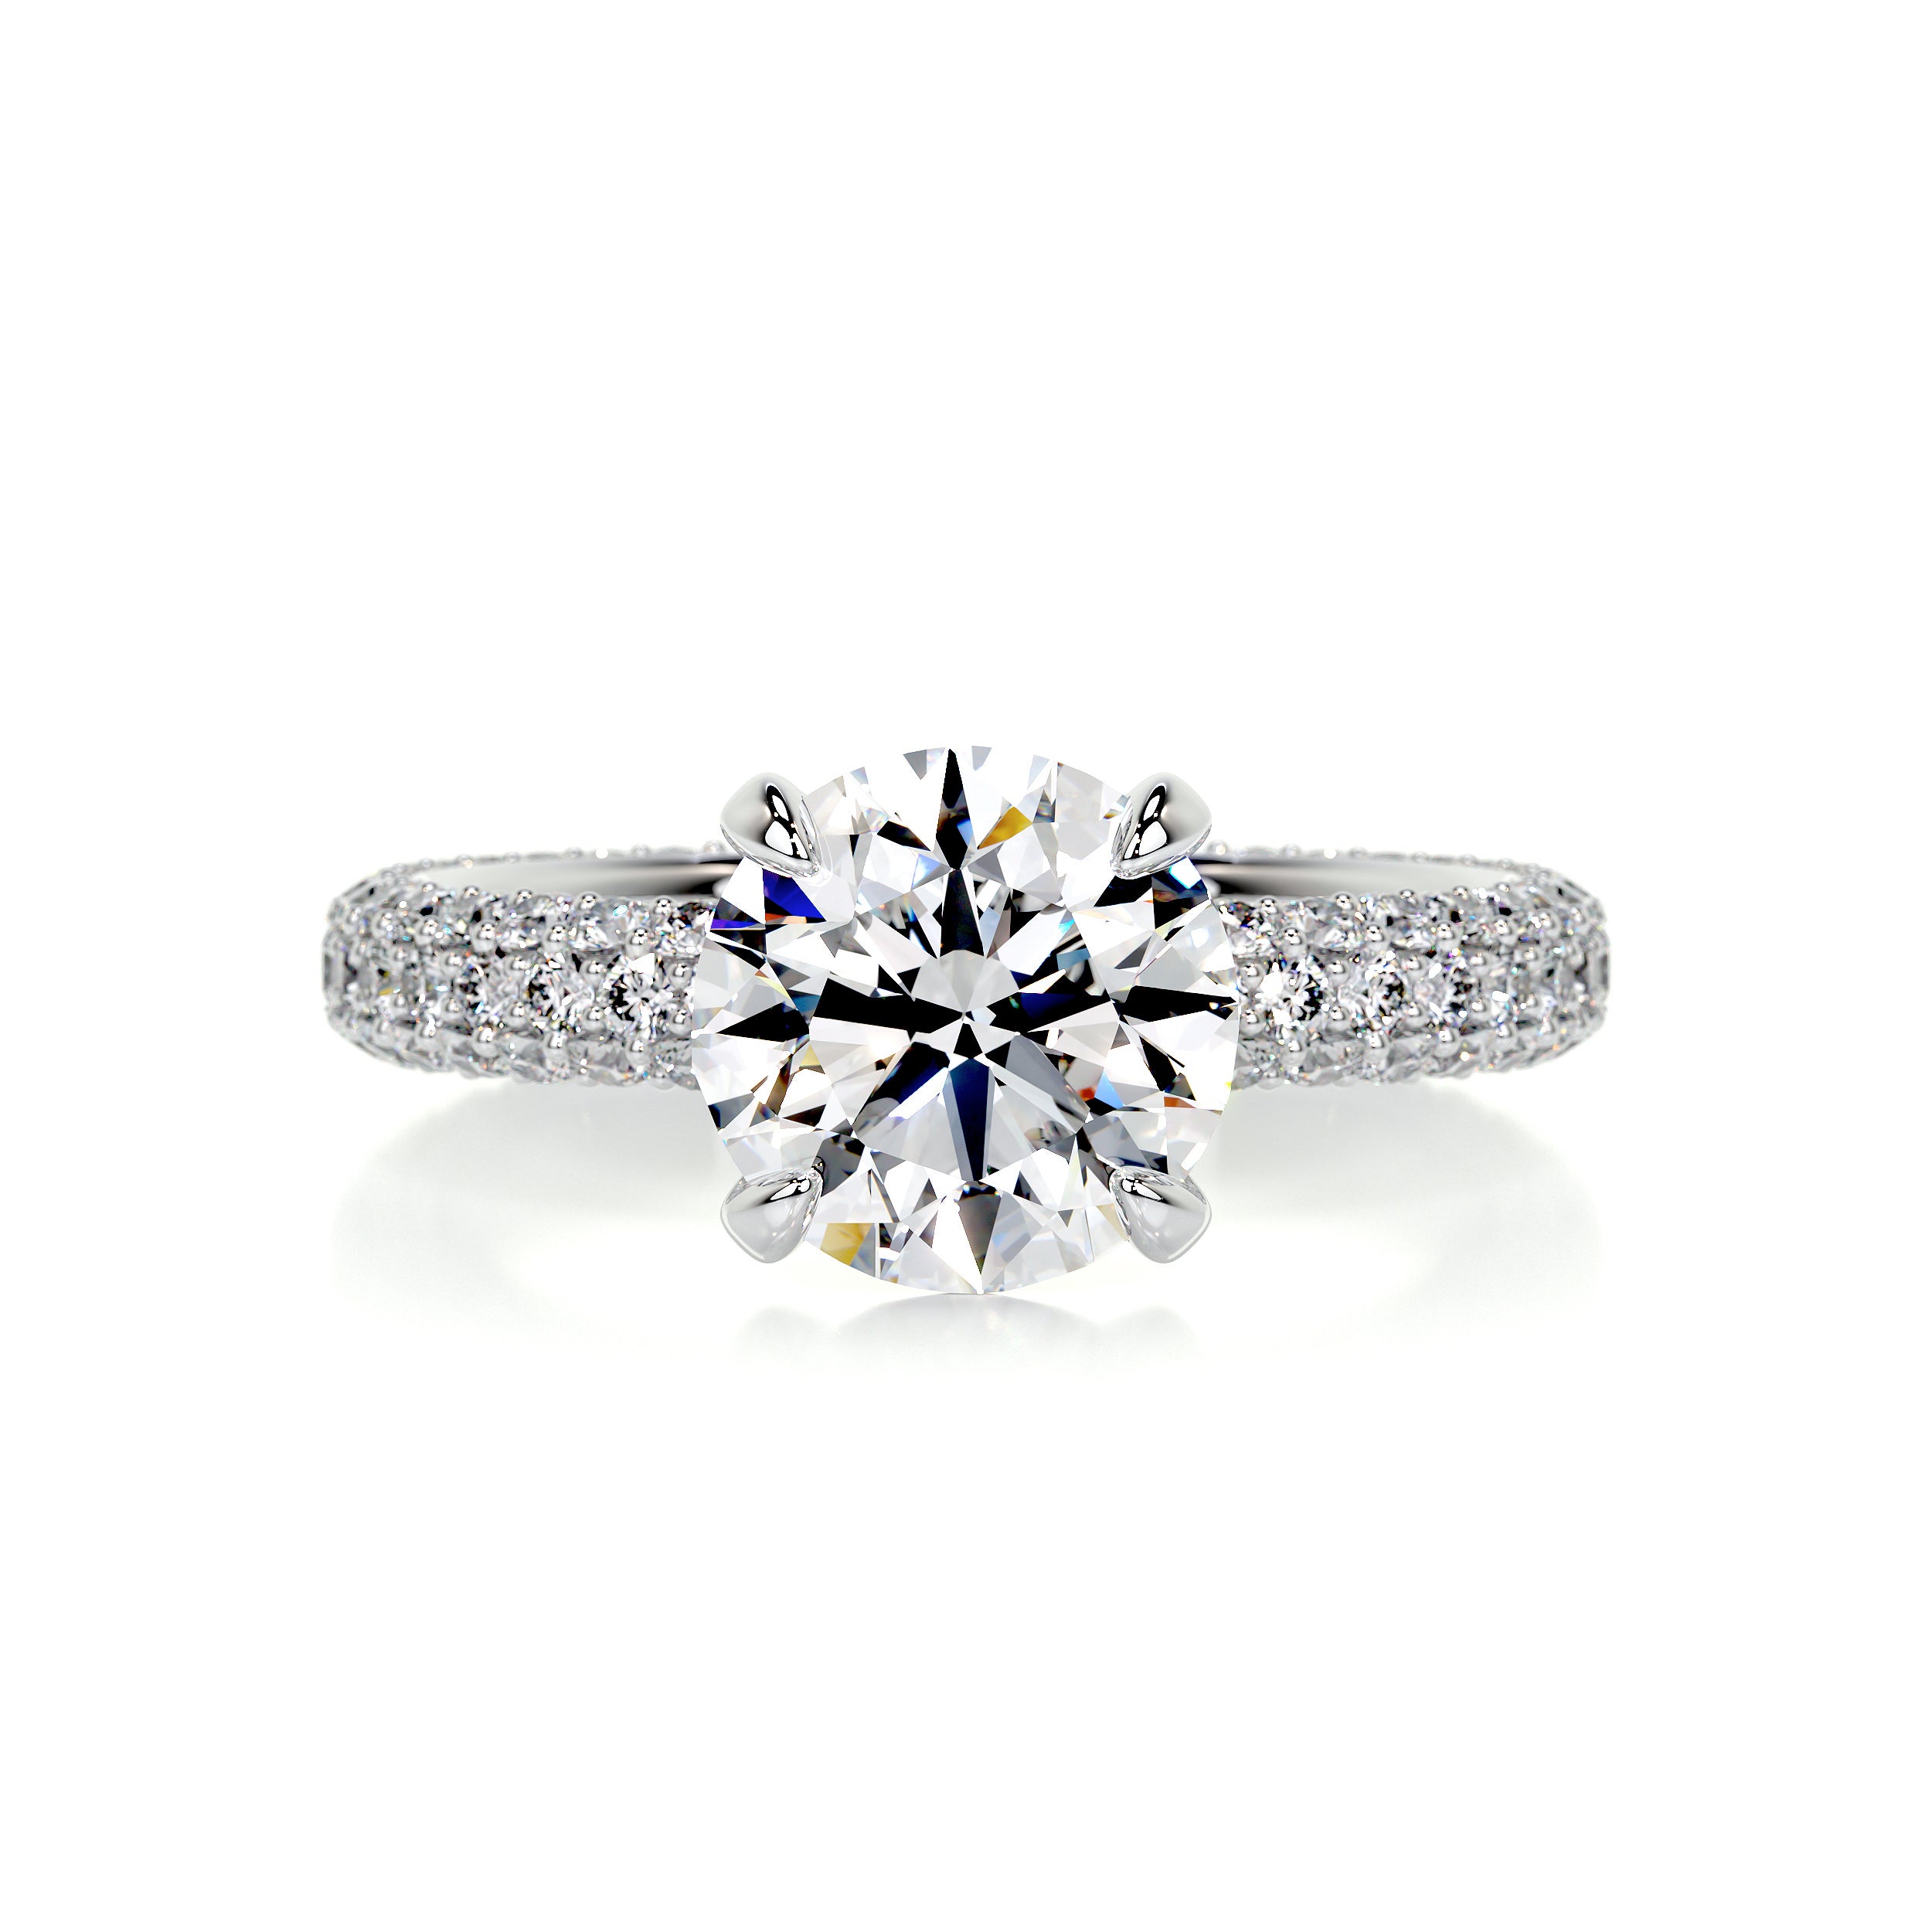 Charlotte Diamond Engagement Ring   (2.5 Carat) -18K White Gold